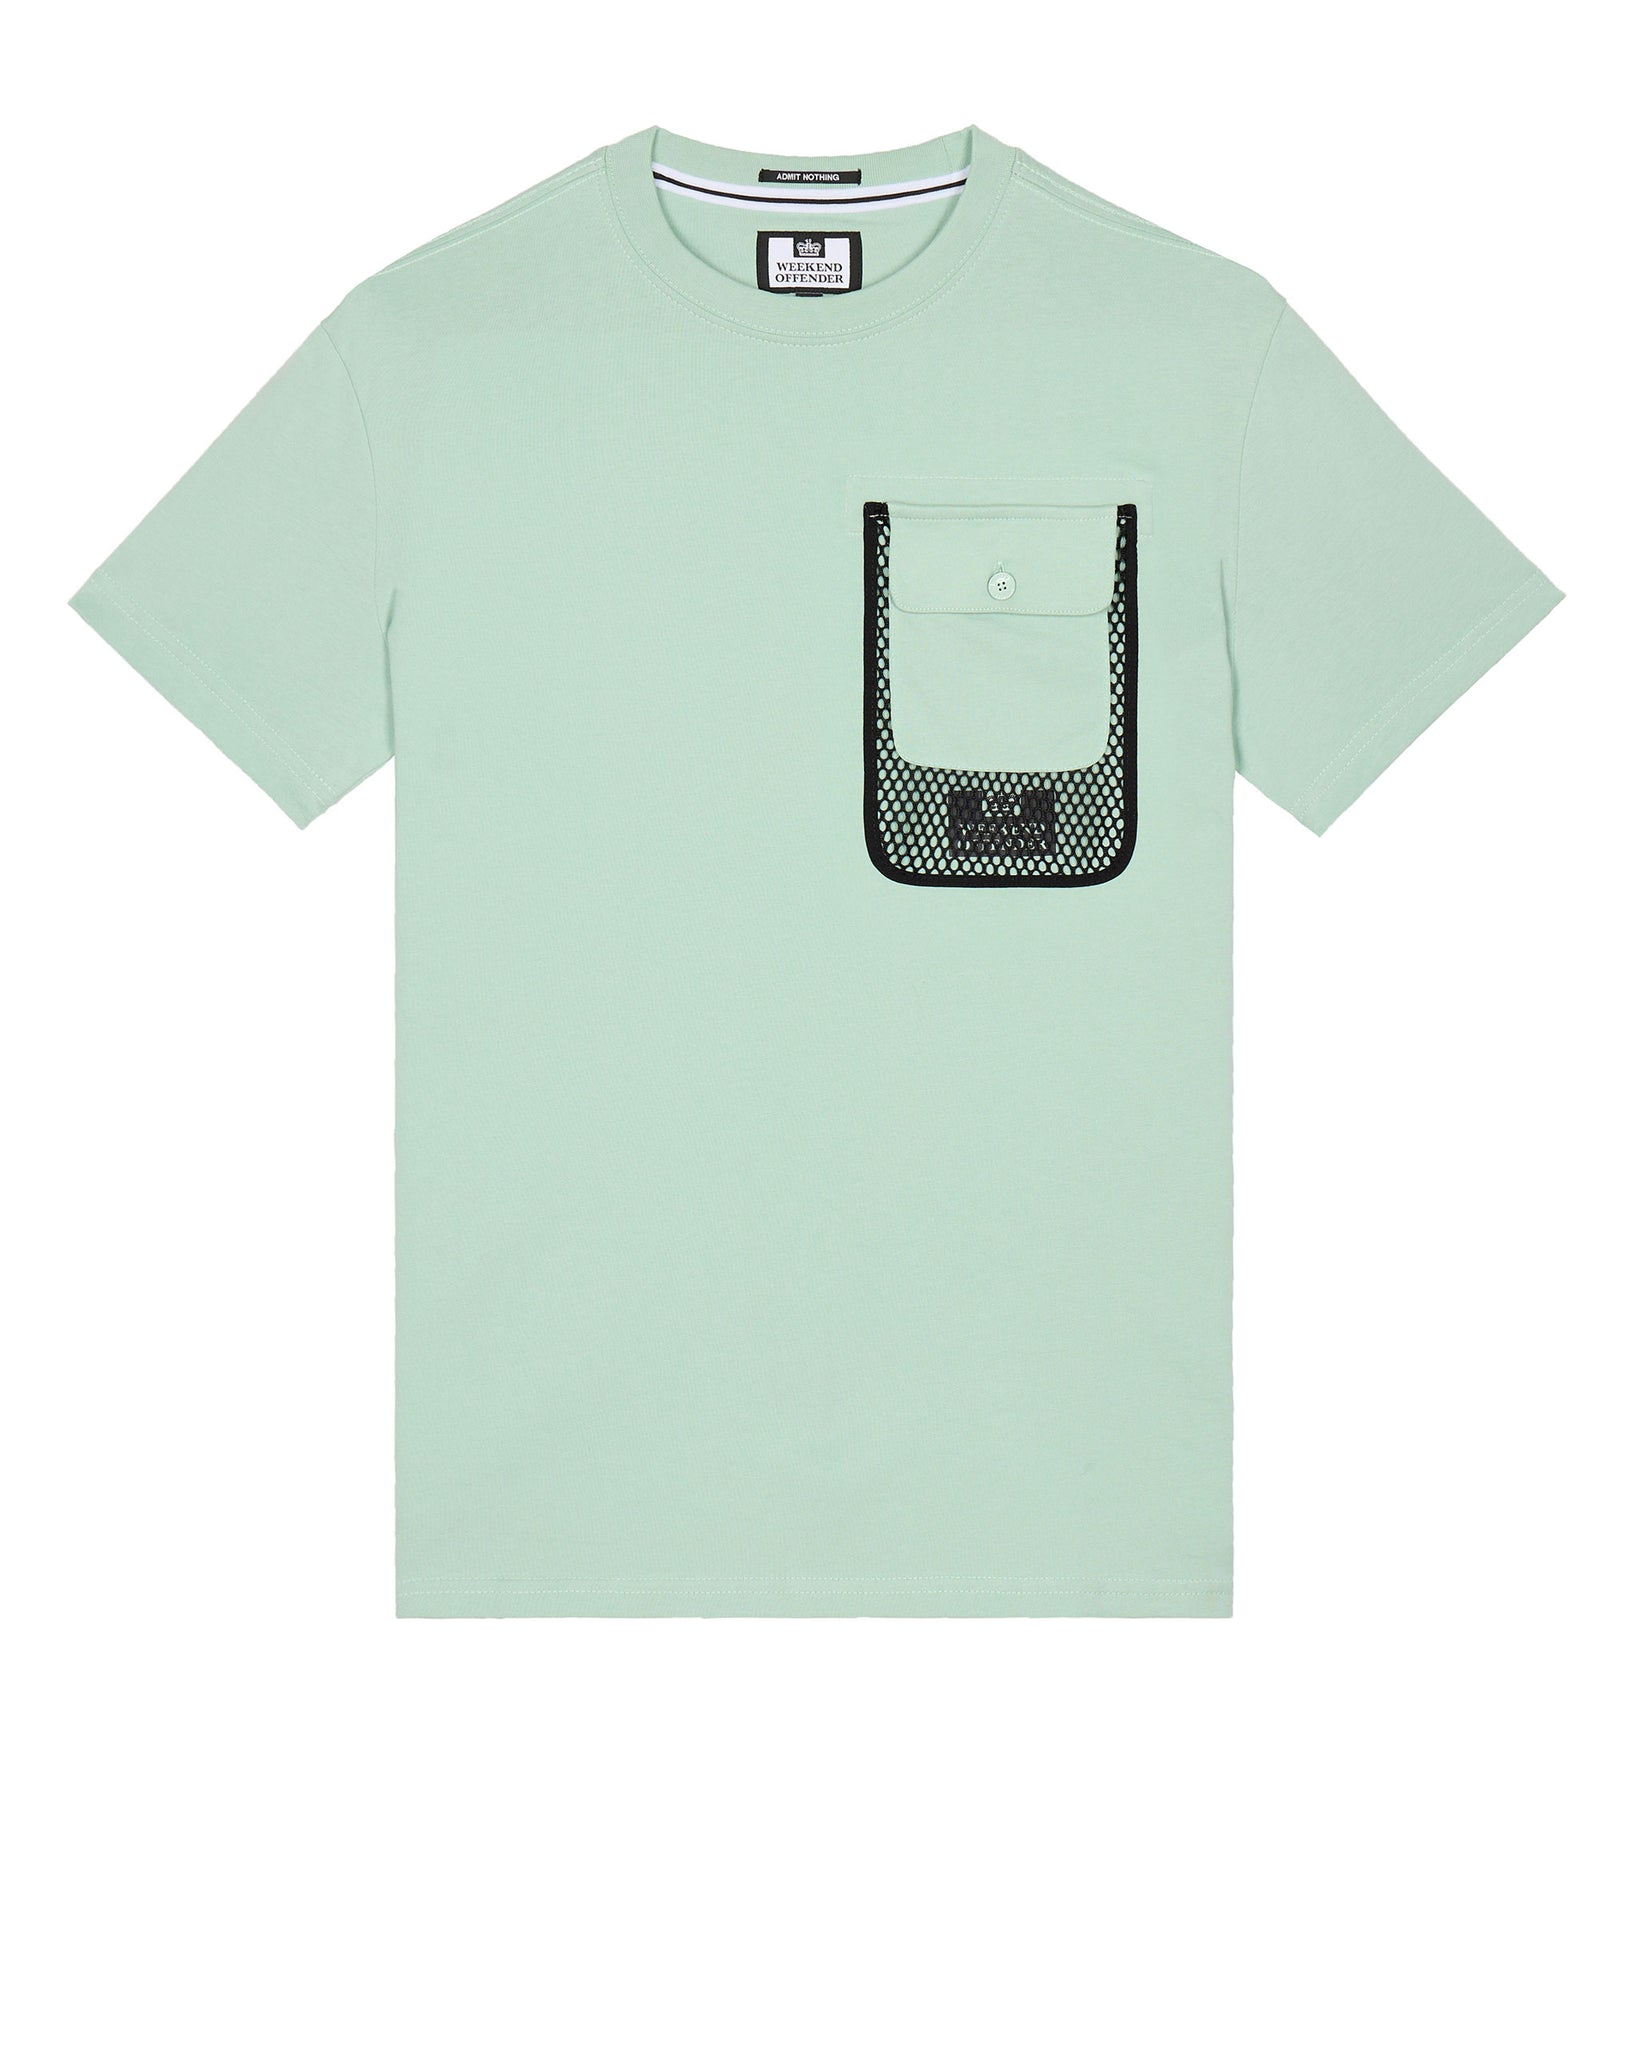 Lens Mesh Pocket T-Shirt Mint Tea Green